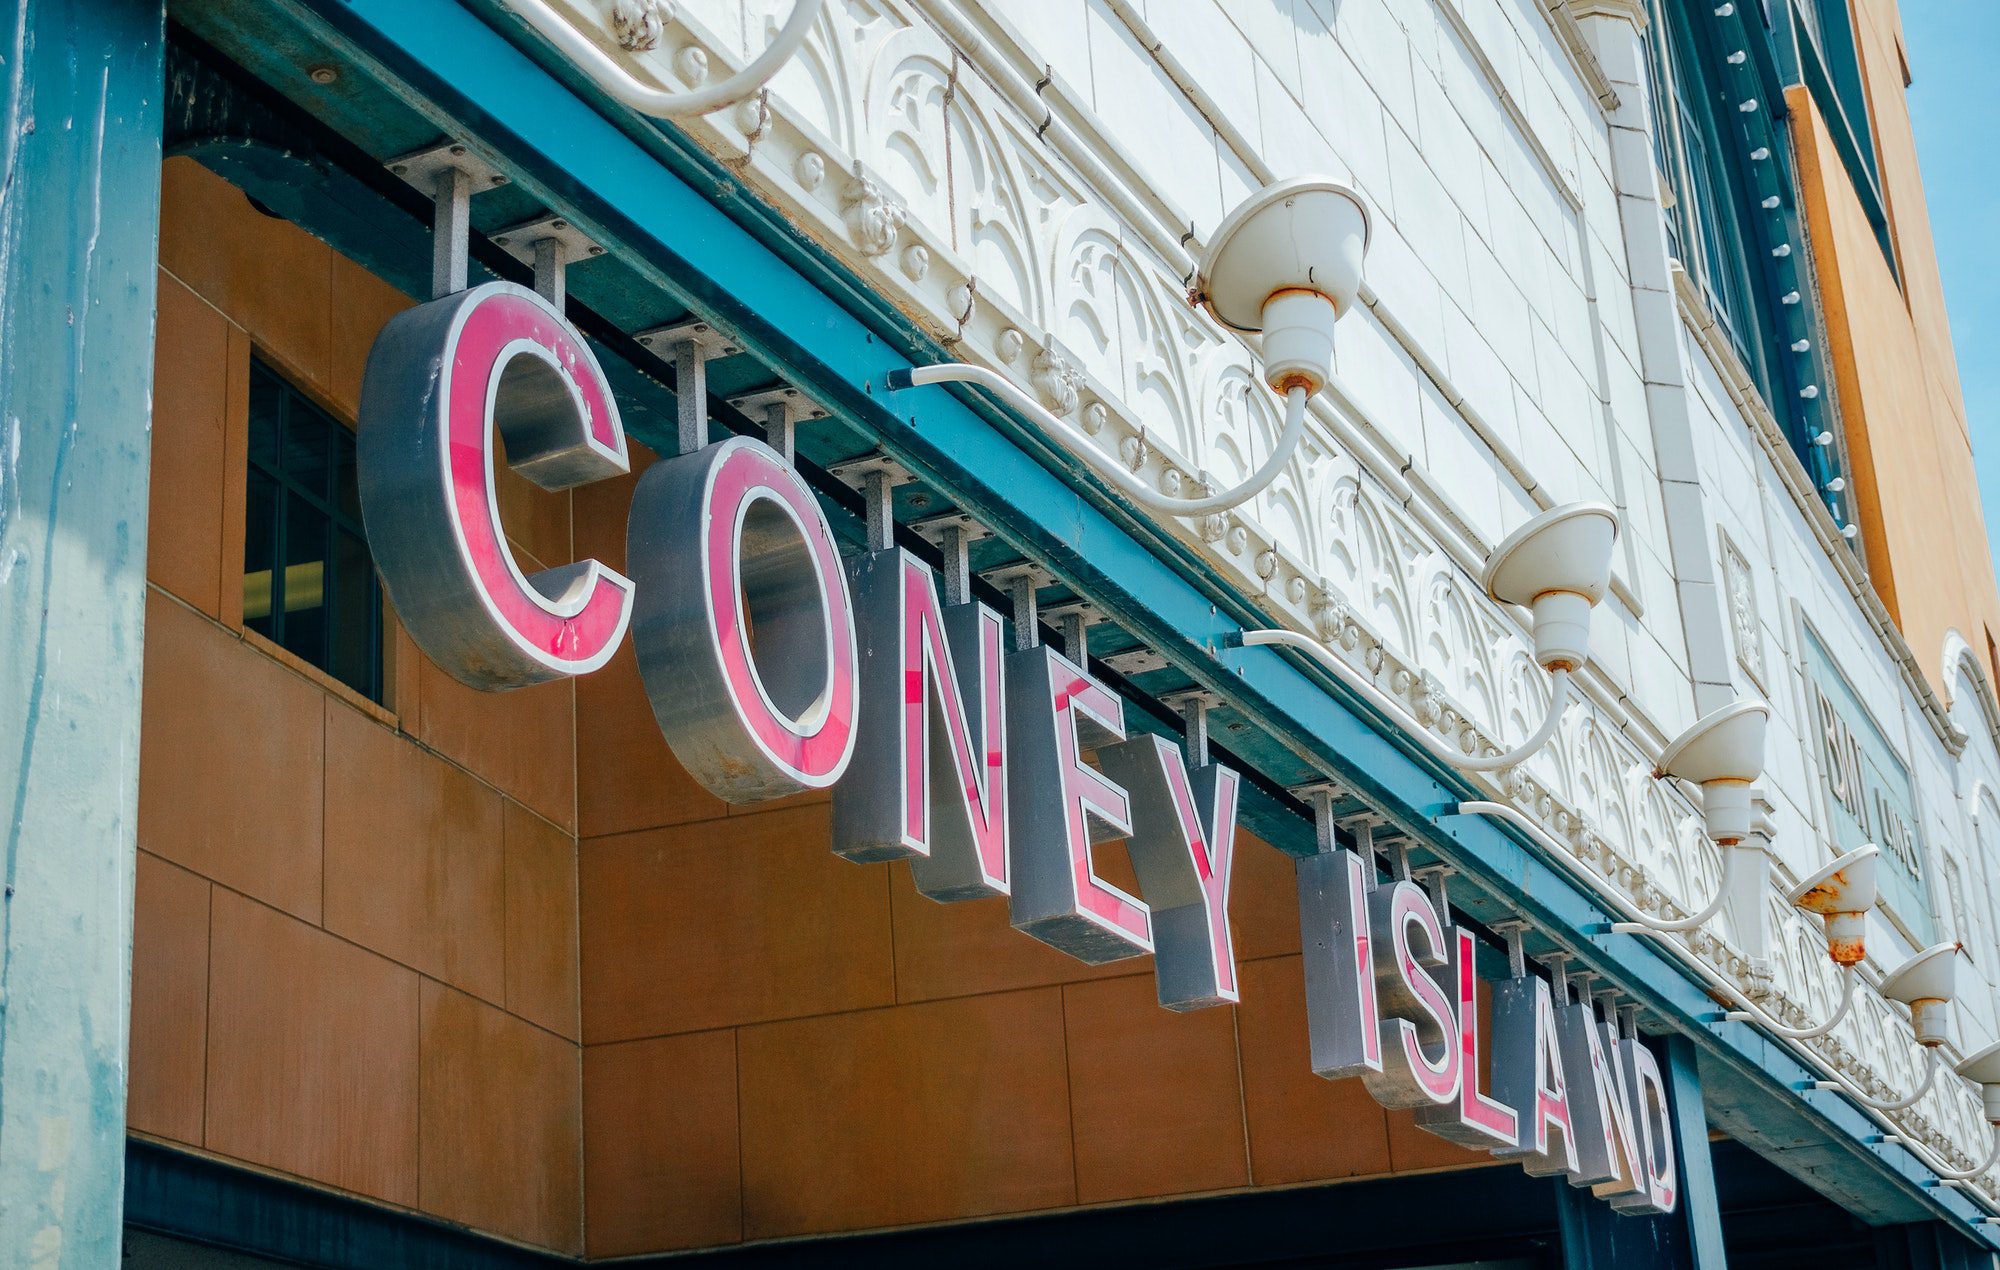 Coney Island entrance sign to subway